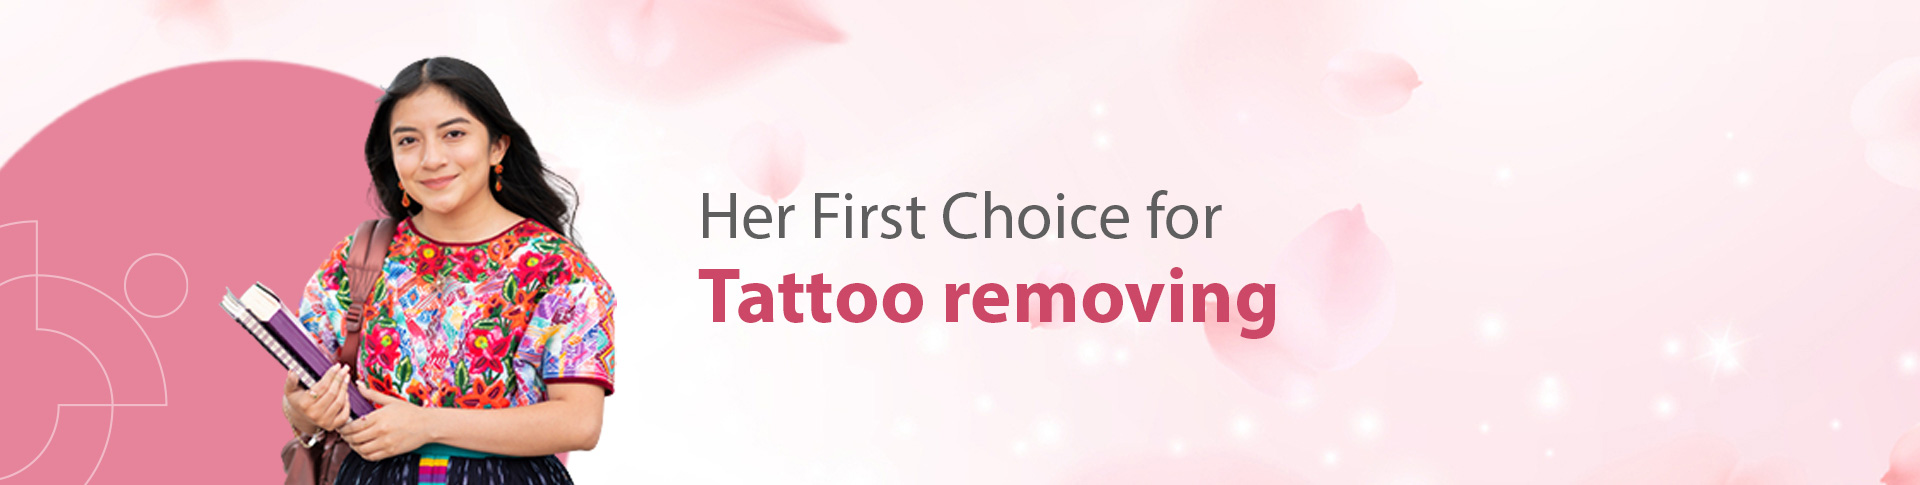 Tattoo Removal - Best Multispecialty Hospitals in Kolkata